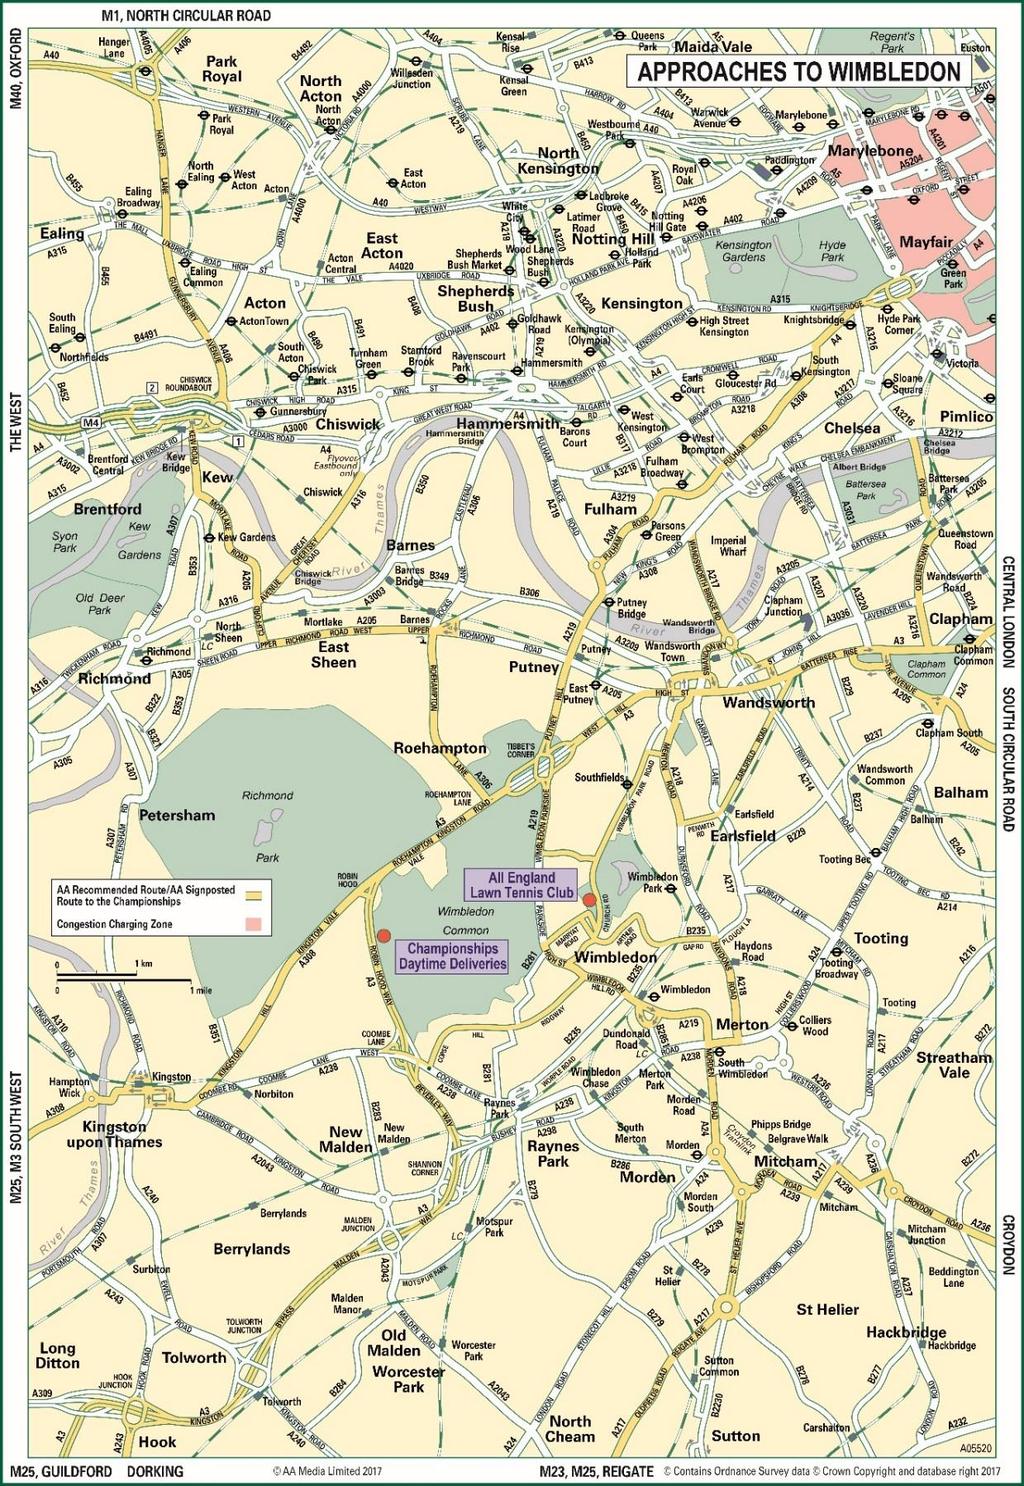 E MAPS OF WIMBLEDON Please find enclosed maps